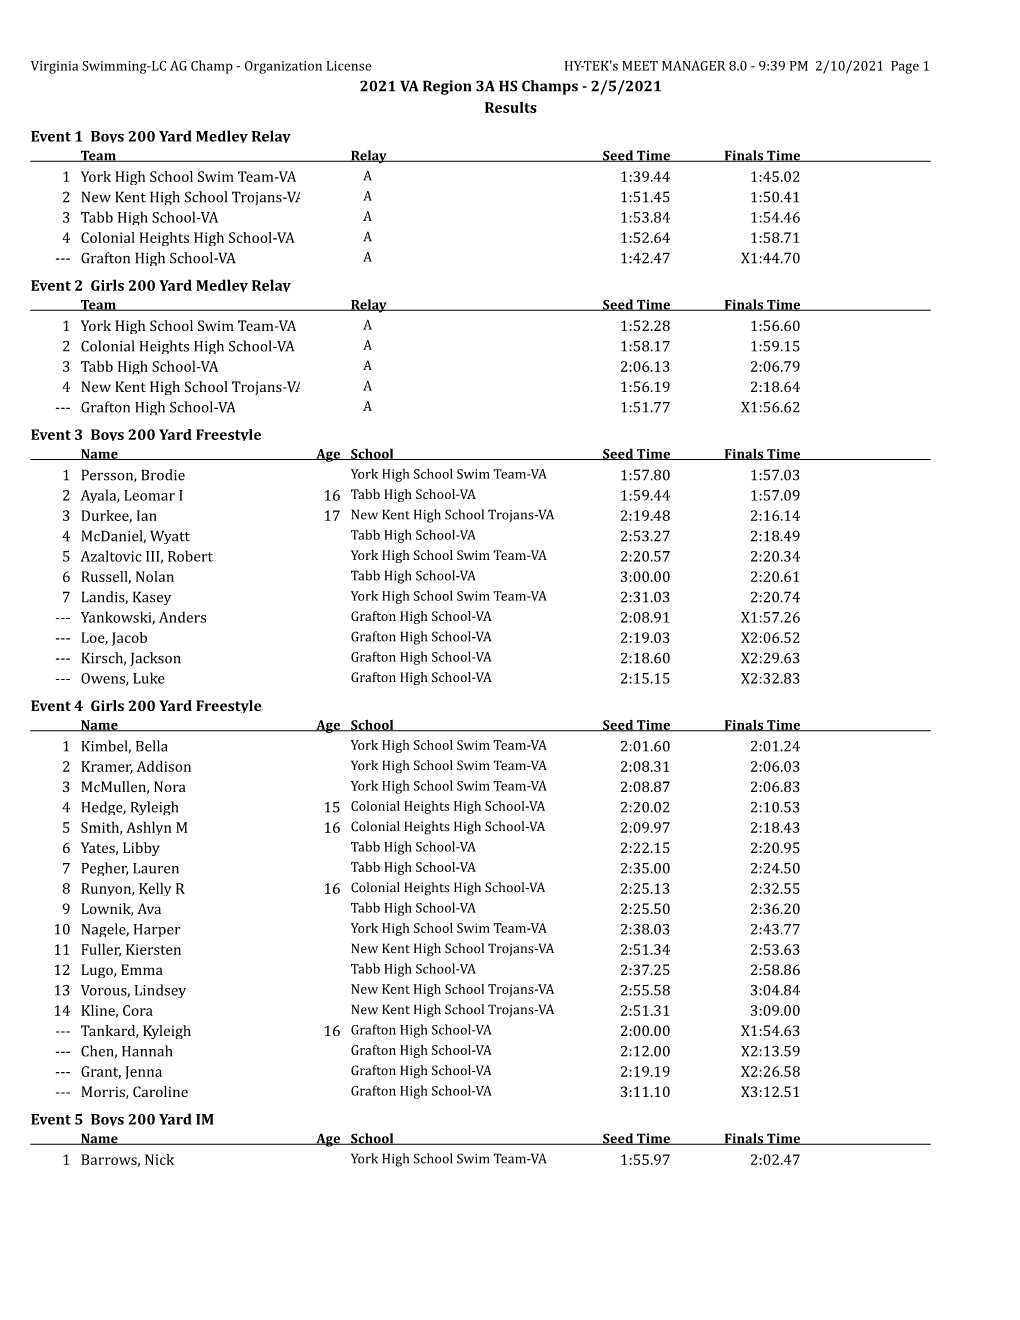 2021 VA Region 3A HS Champs - 2/5/2021 Results